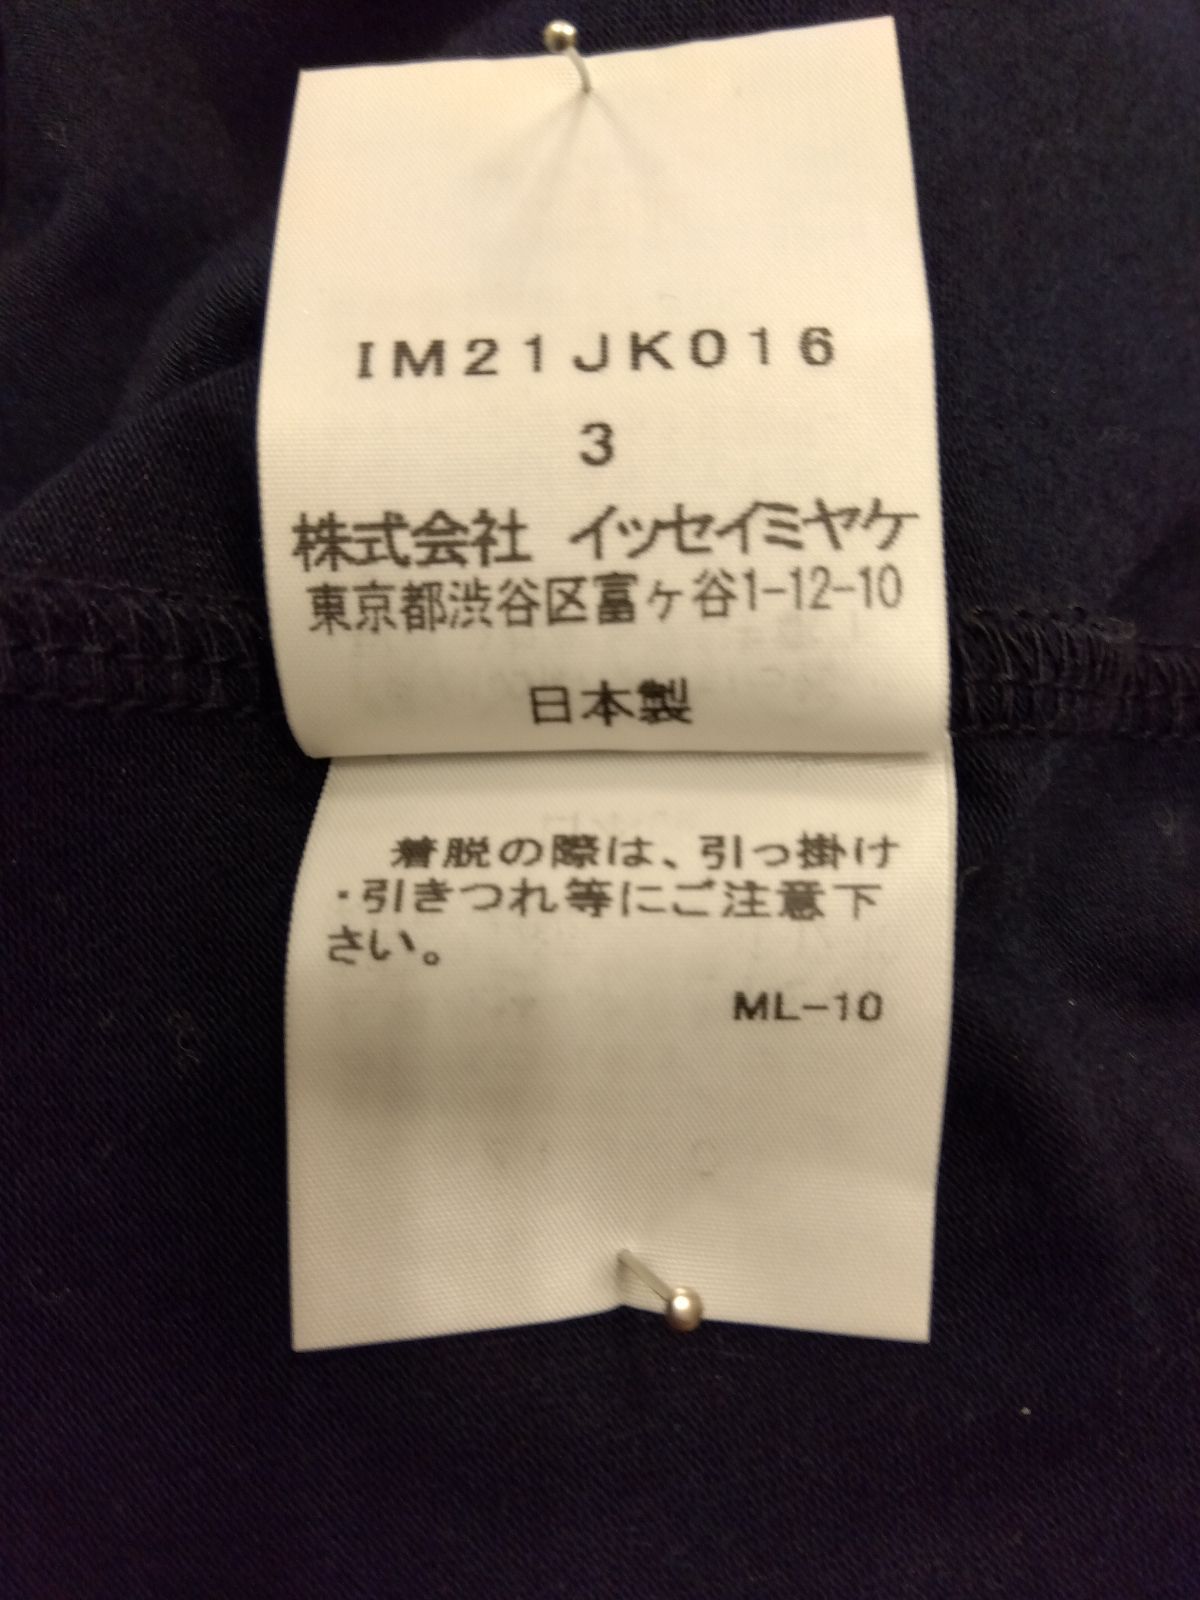 M7  イッセイミヤケ  ISSEY MIYAKE  トップス  ネイビー  サイズ３  日本製  七分袖  異素材カットソー  フロントレイヤーチュール  手洗い可♪